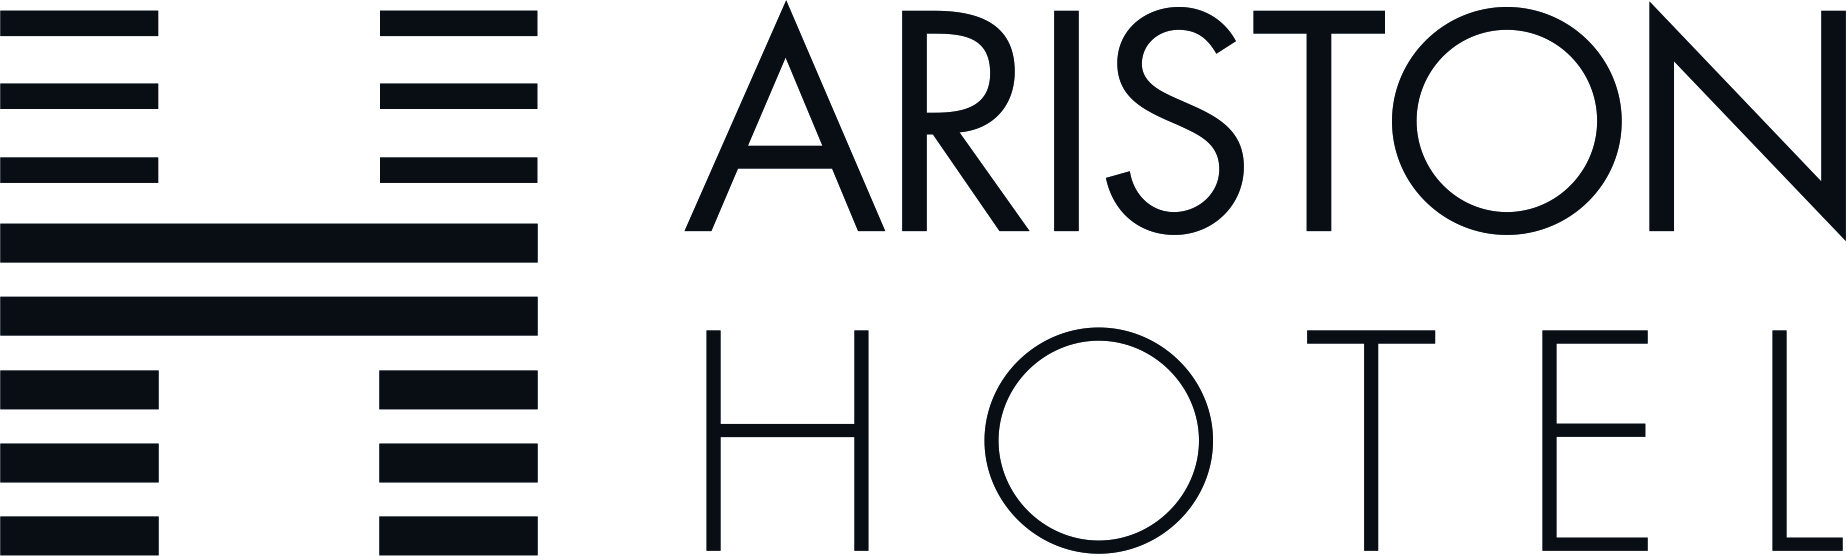 Logo ARISTON HOTEL NUEVO horizontal 1